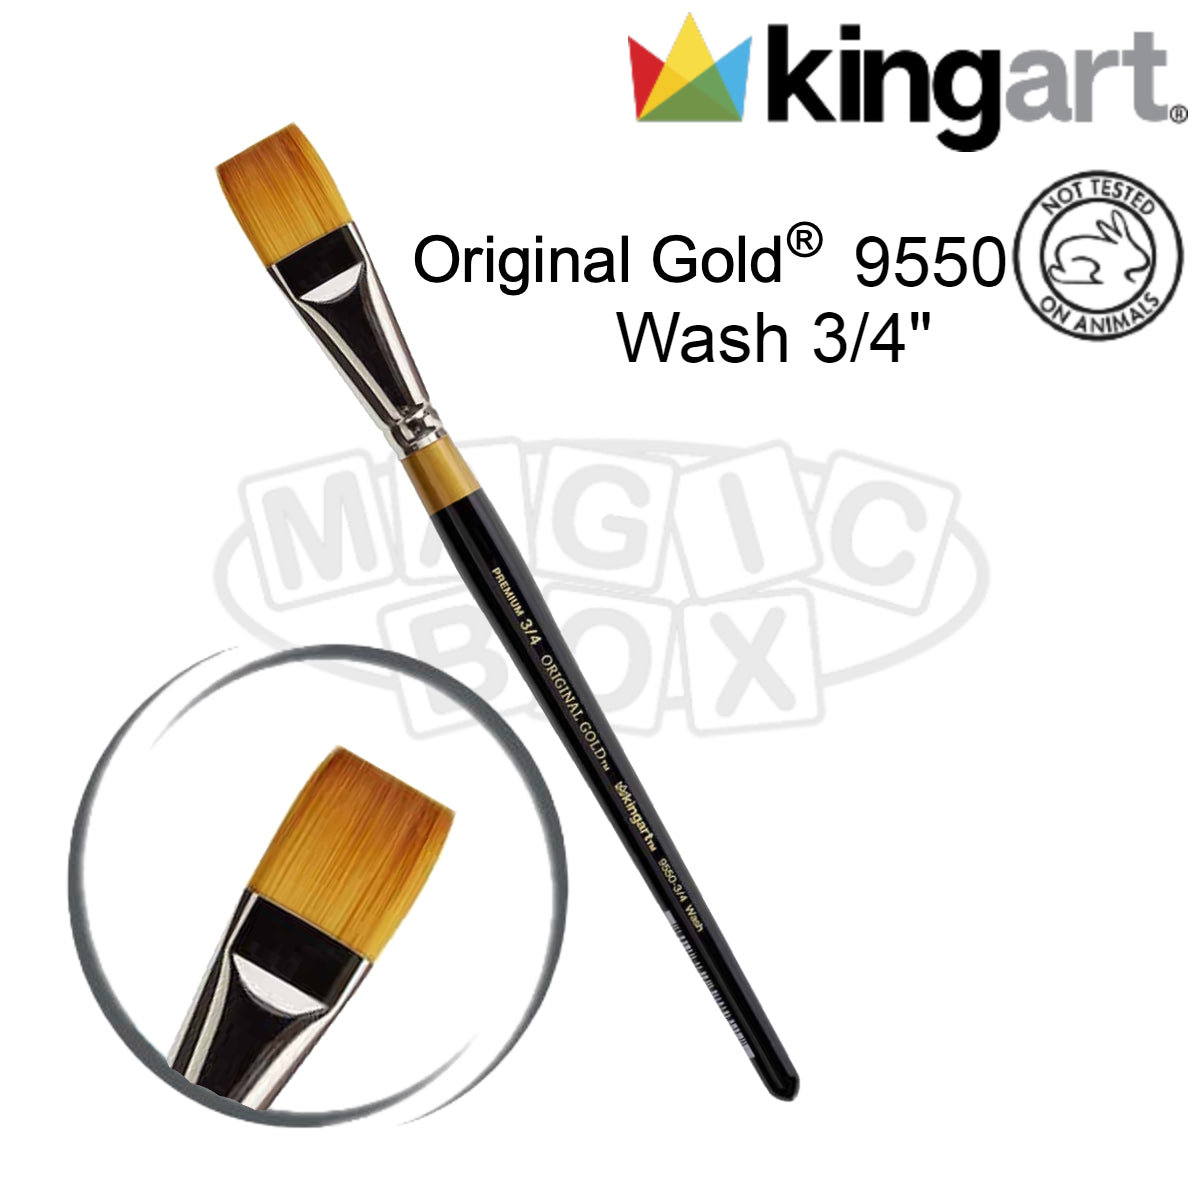 Kingart 9550 Series, Wash 3/4"